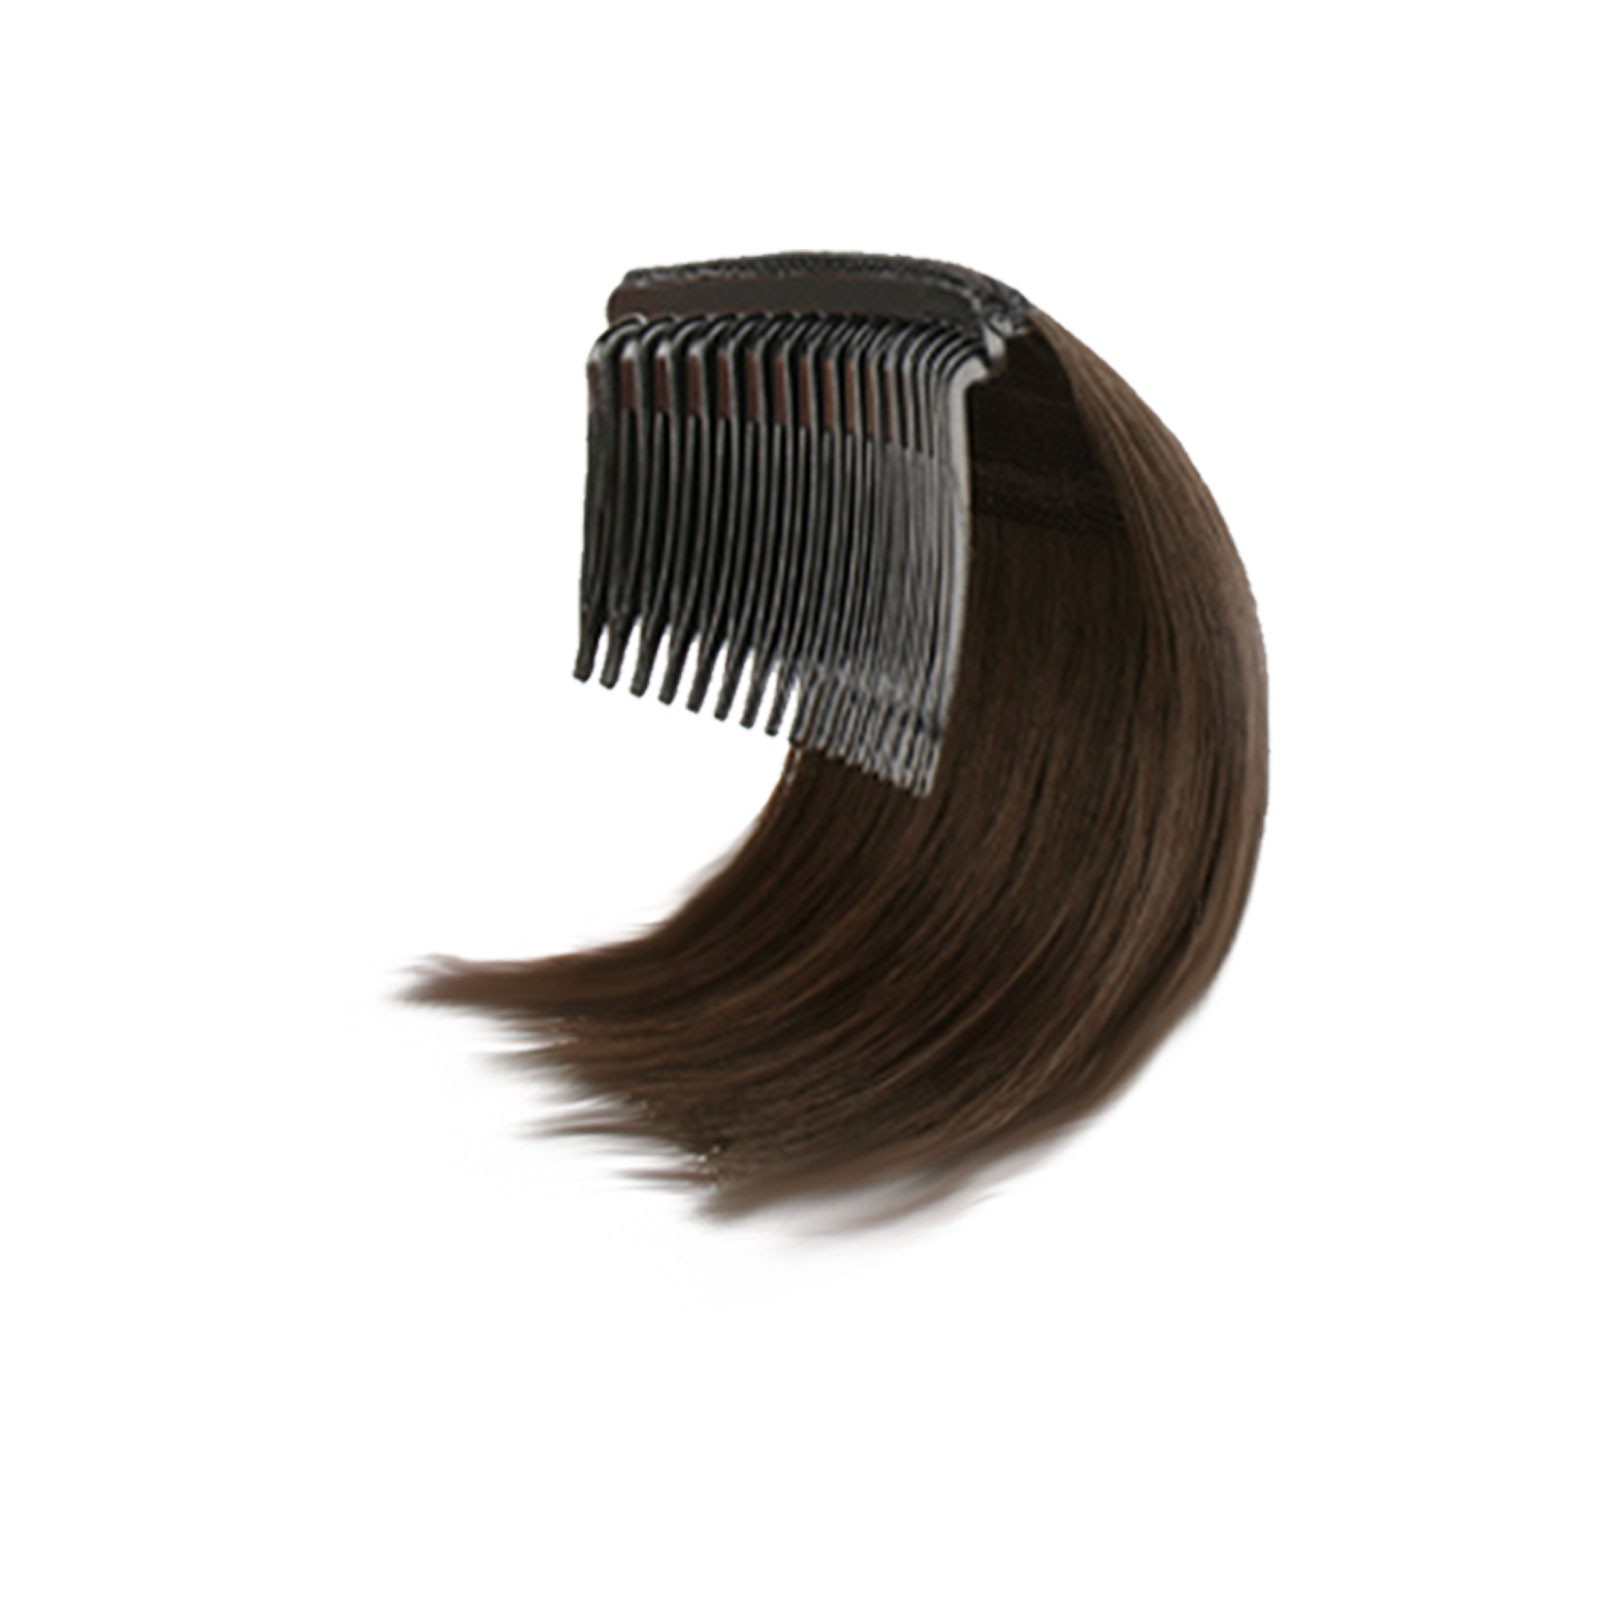 HSMQHJWE Hair Clip for Thick Hair Women Hair Puff Increase Female Pad Comb Comb Hair Hair Simulated Powder Hair Top Pad Wig Hair Pad Increase Lazy Baby Hair Accessories Clip - image 1 of 5